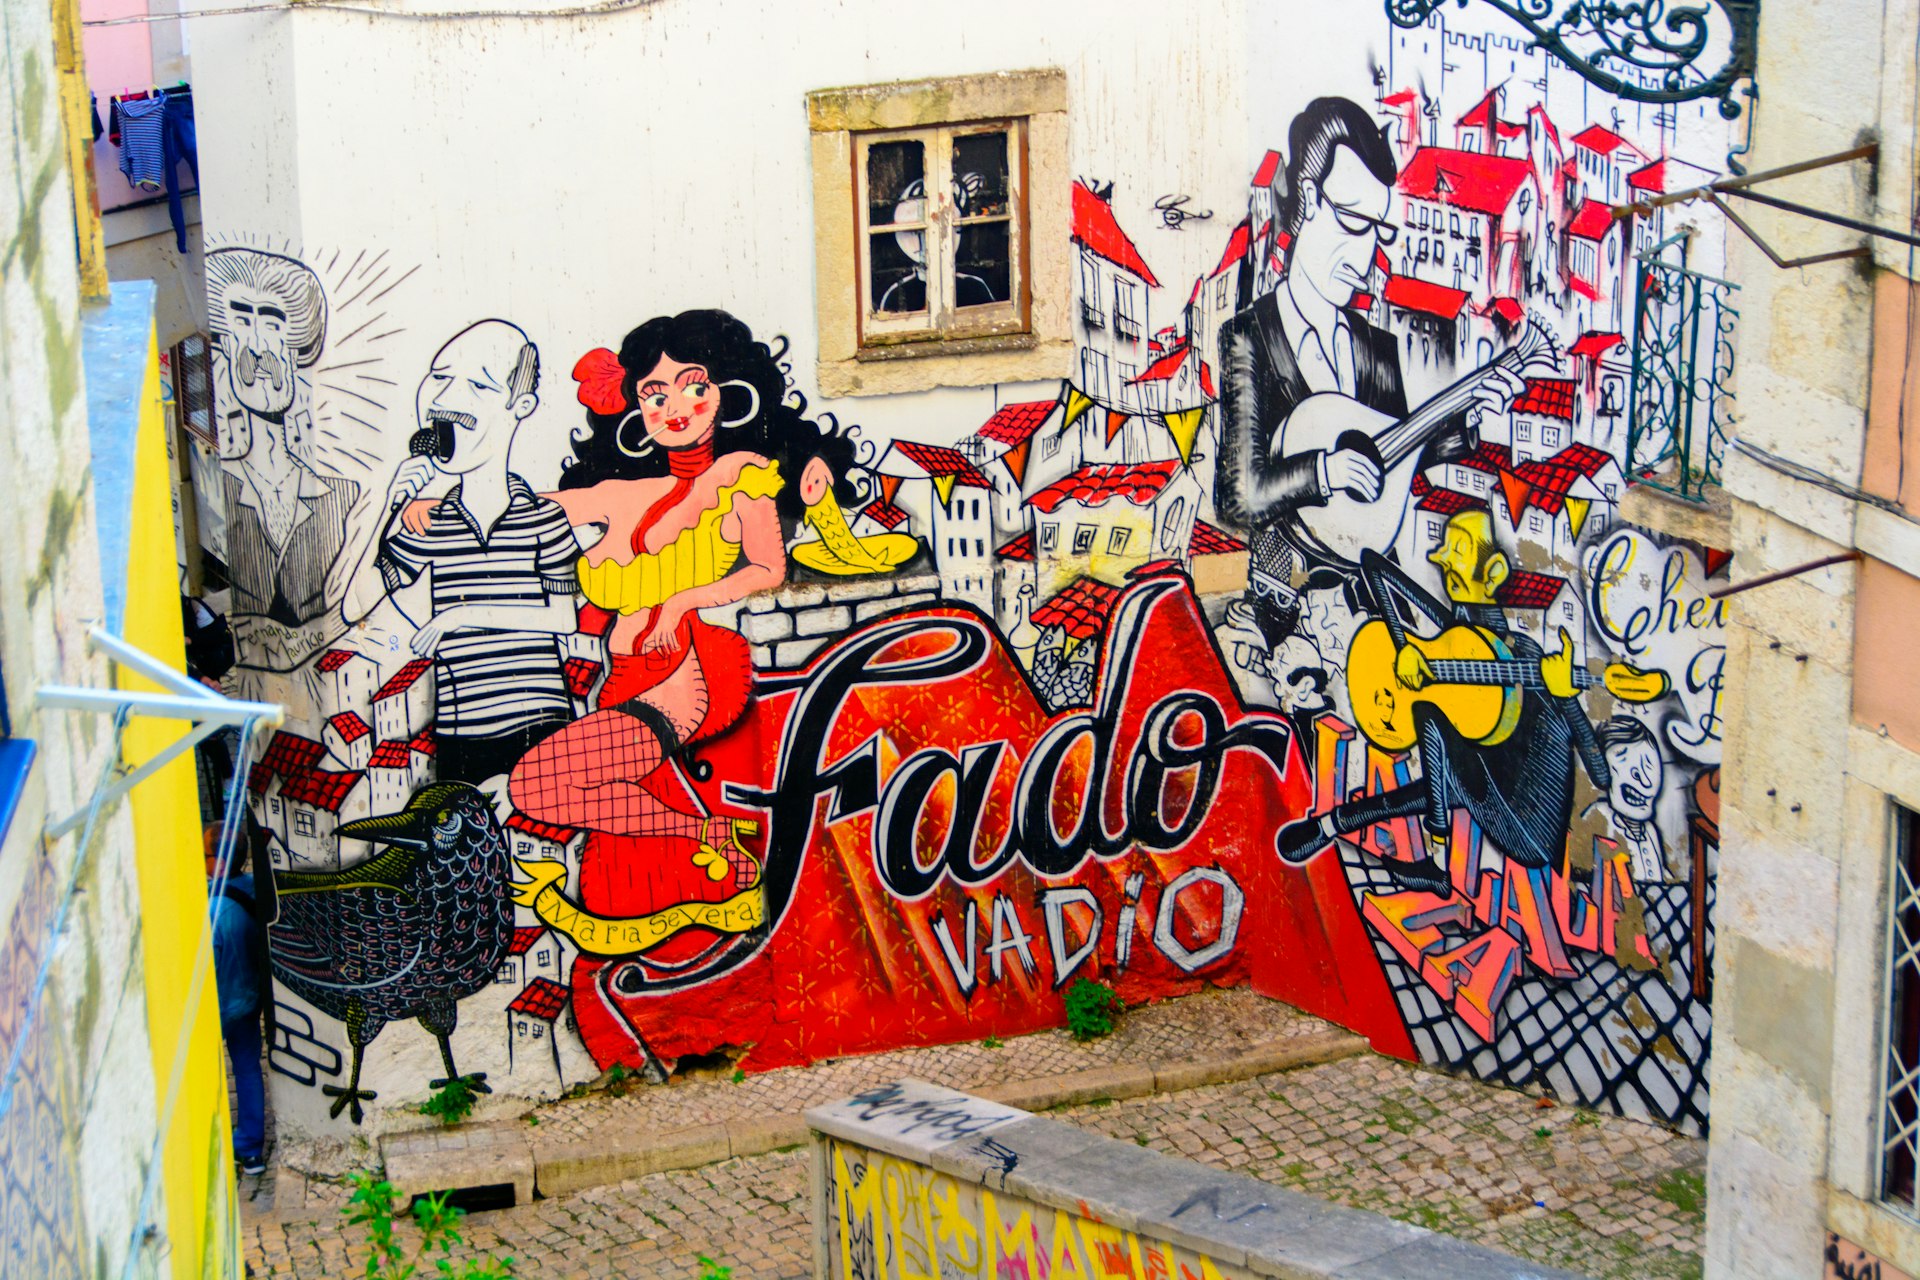 Fado-inspired street art in Lisbon